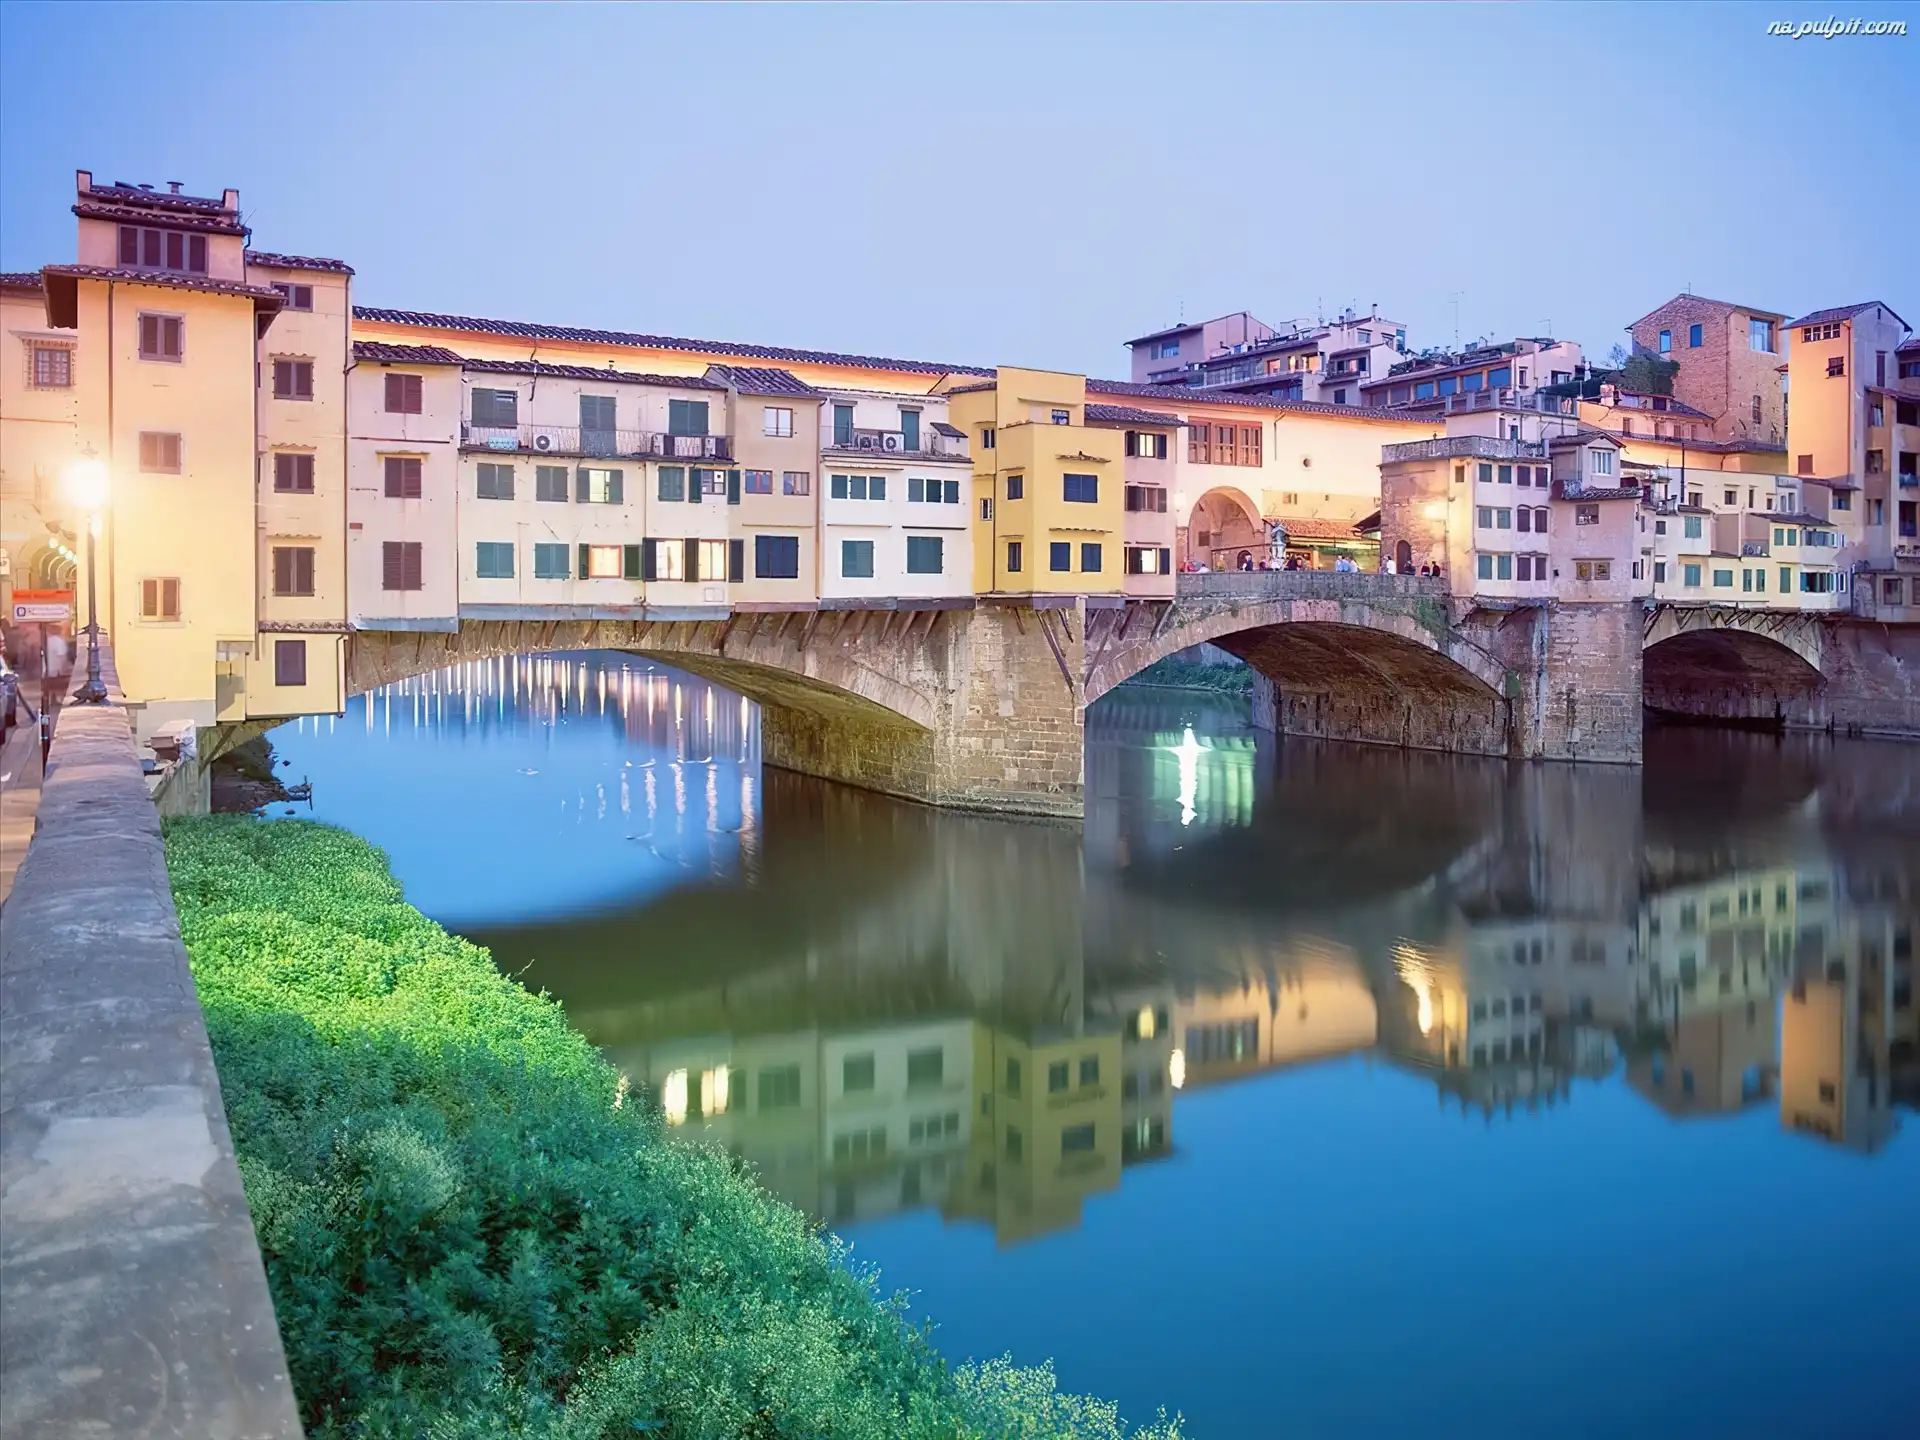 Domy, Rzeka, Vecchio, Most, Arno, Florencja, Ponte